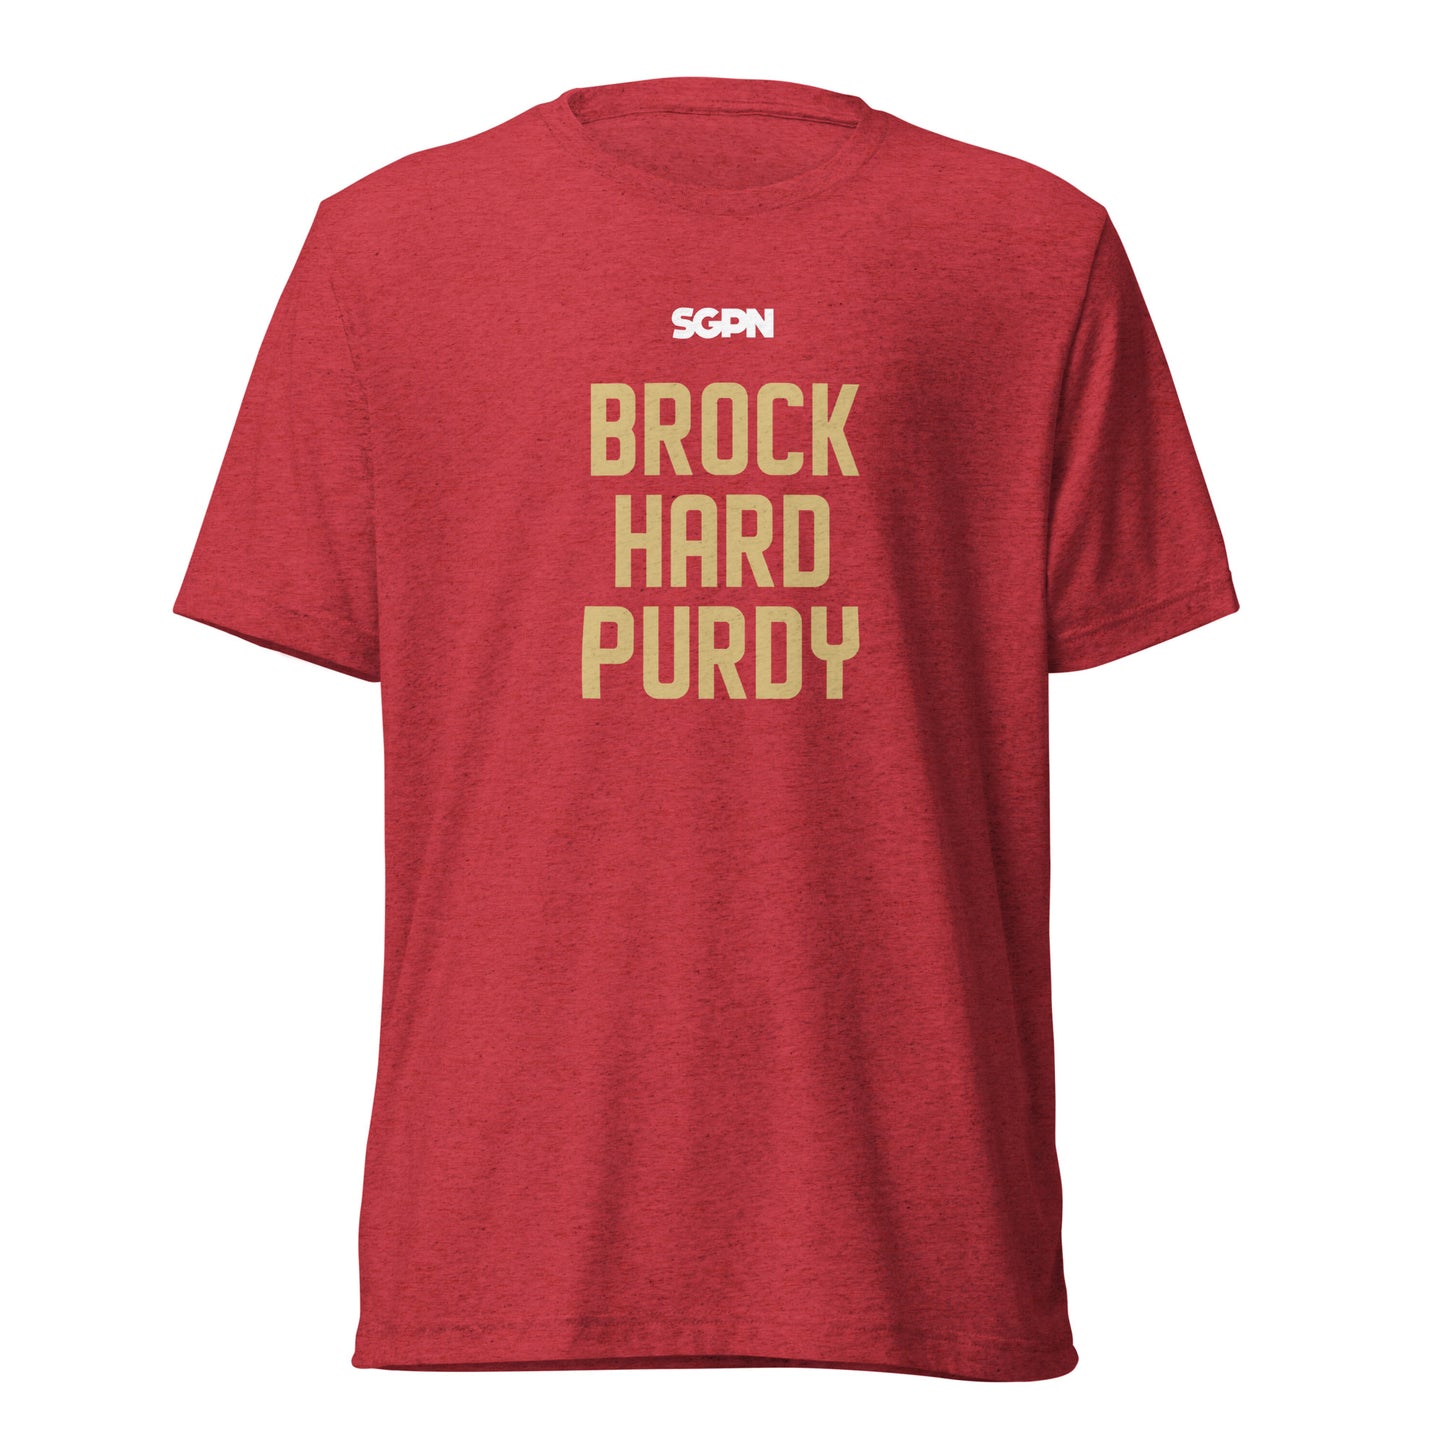 Brock Hard Purdy - SGPN - Short sleeve t-shirt